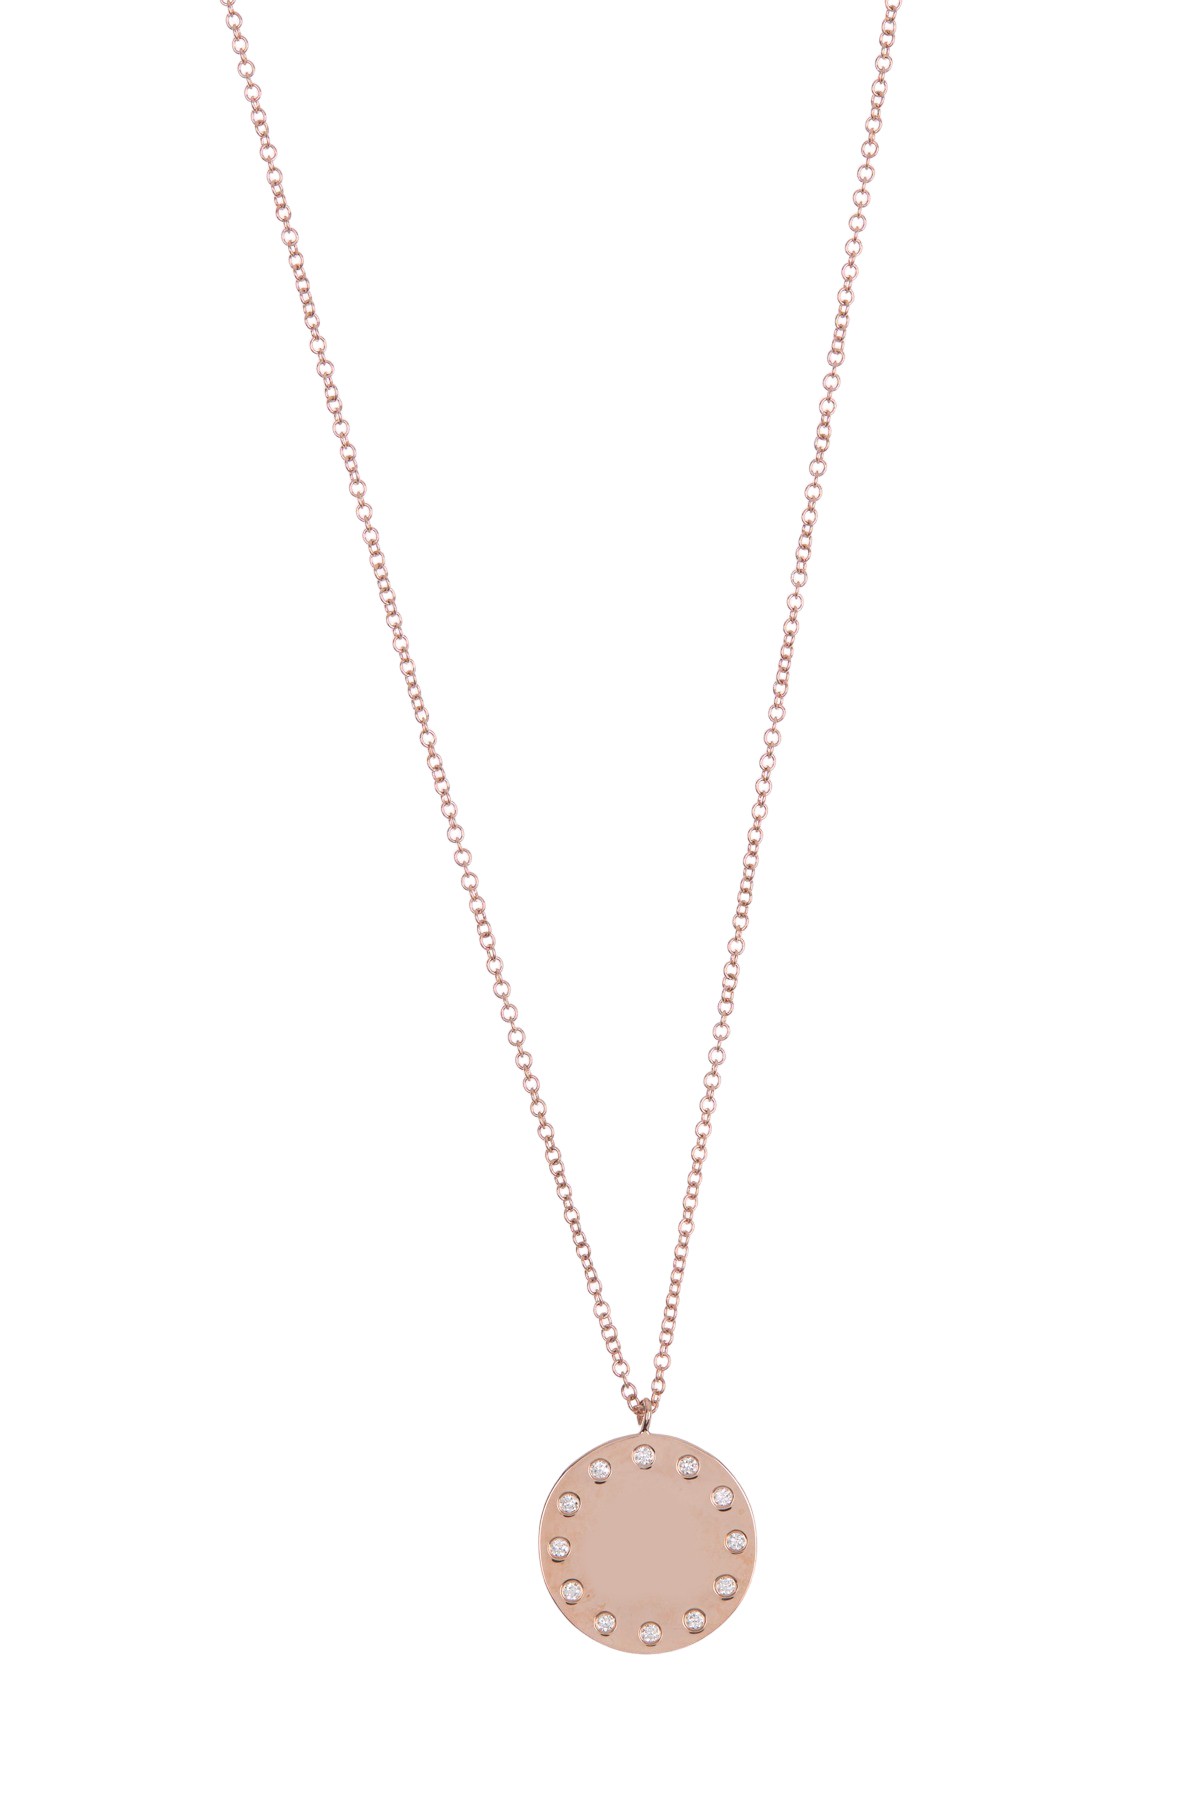 14K Rose Gold Diamond Disc Pendant Necklace - 0.09 ctw Ron Hami